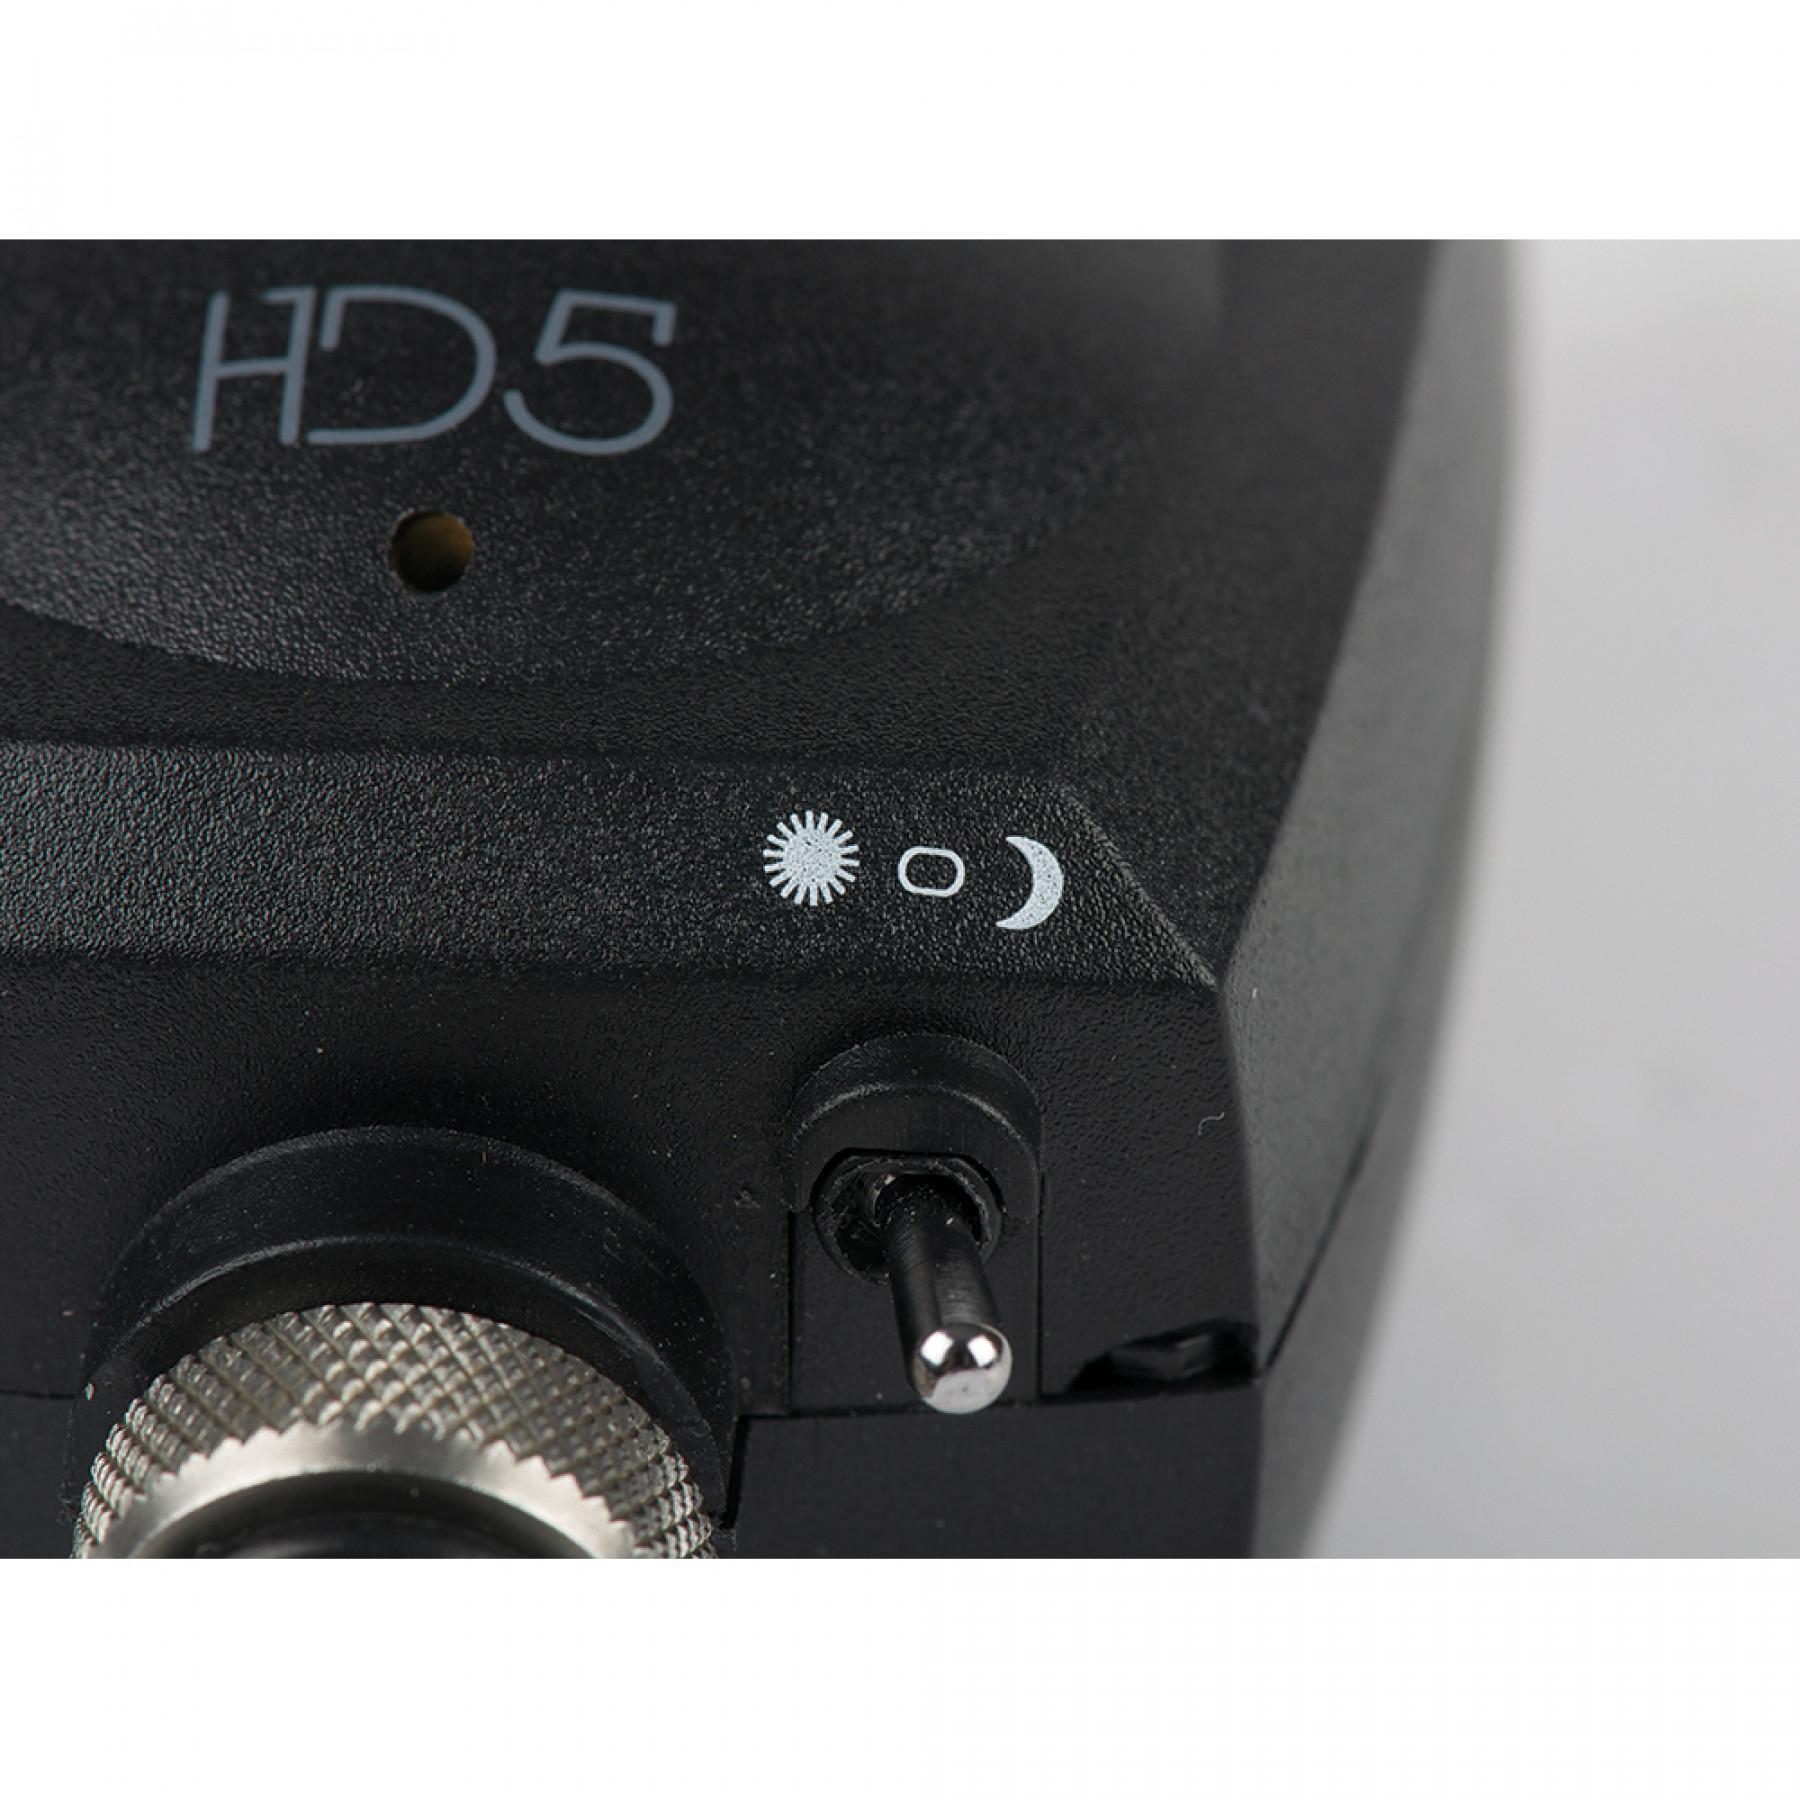 Conjunto de 4 detectores Carp Spirit HD5 + HDR5